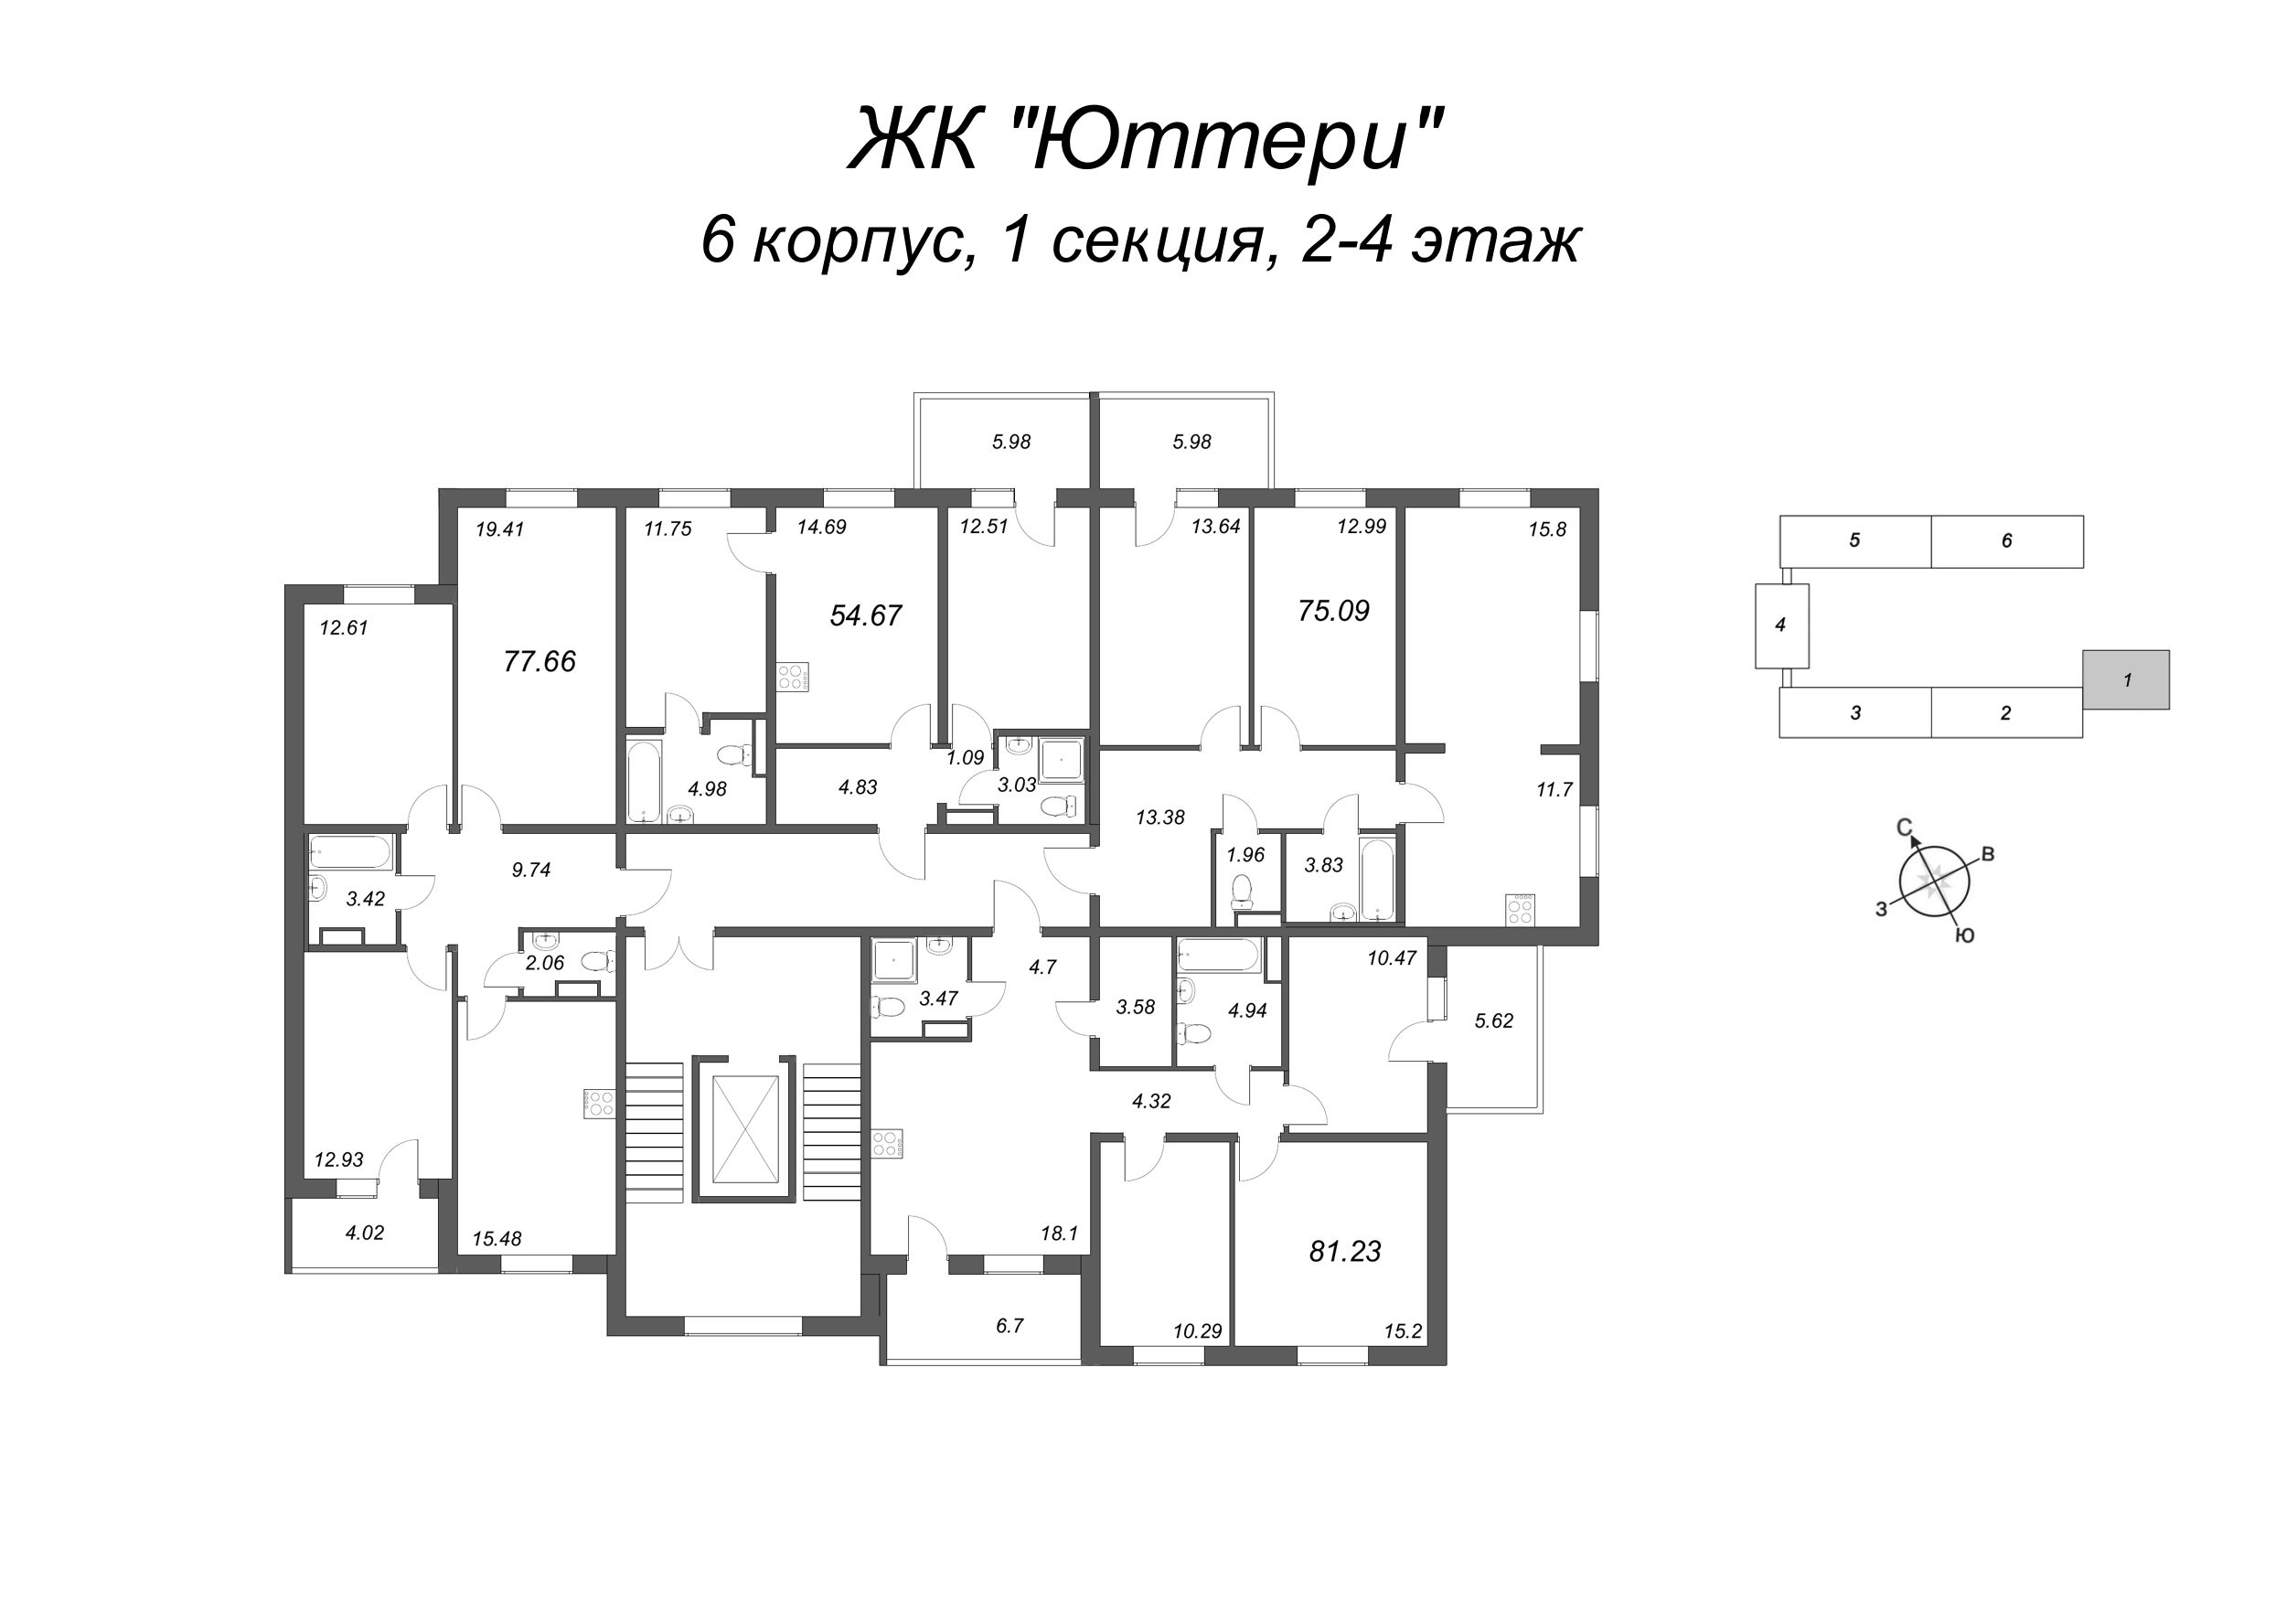 4-комнатная (Евро) квартира, 75.07 м² - планировка этажа